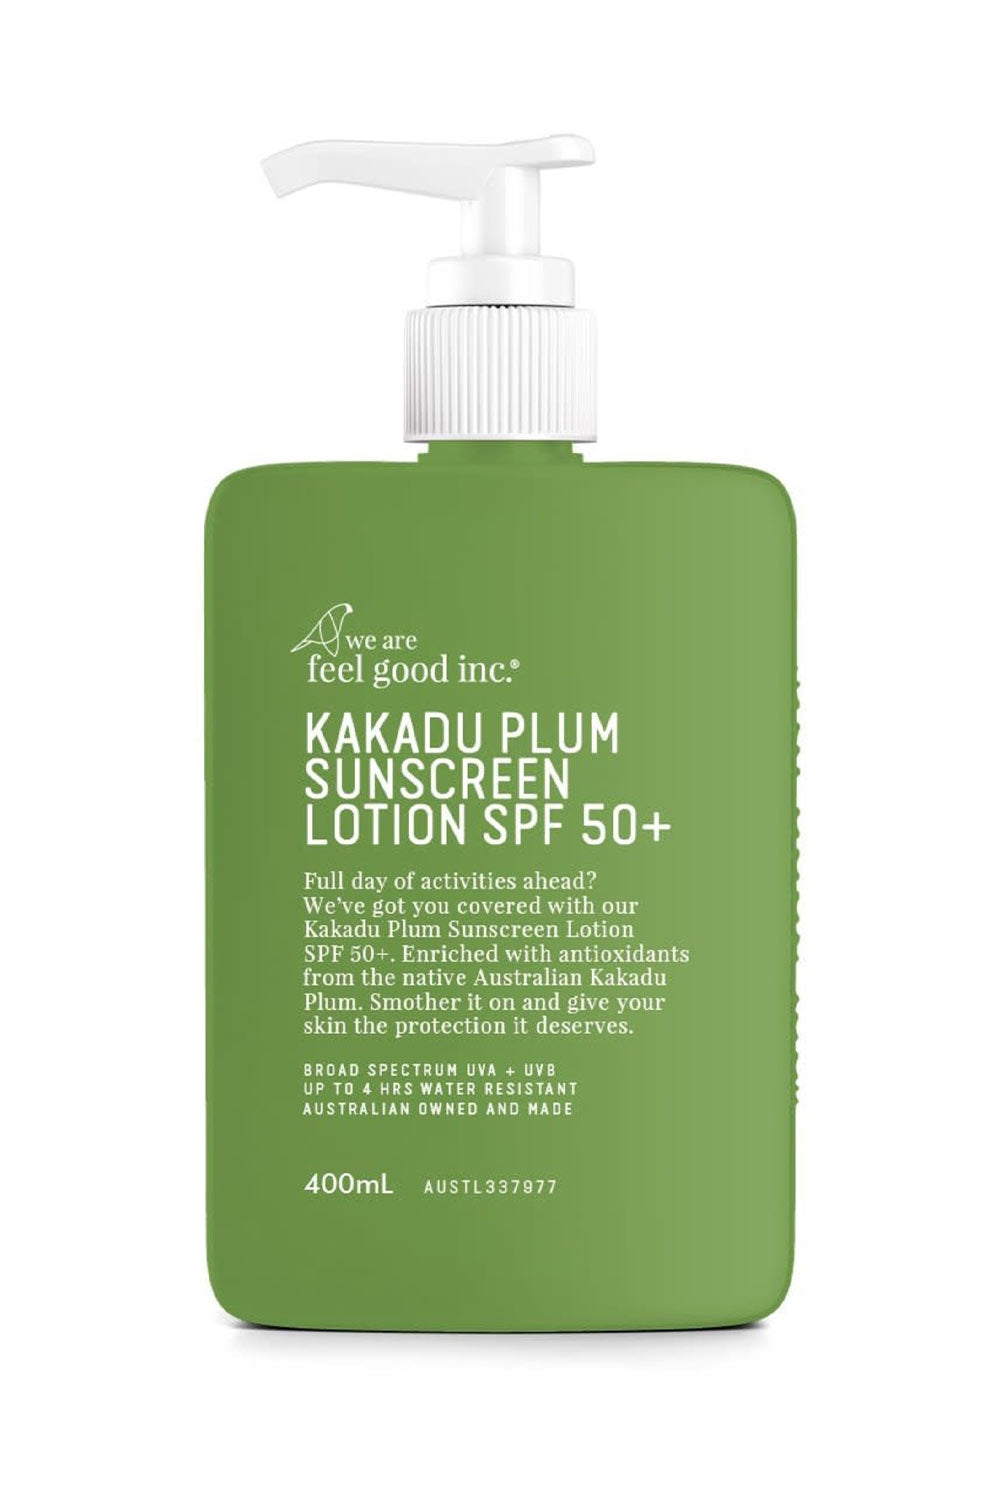 We are feel good inc. Kakadu Plum Sunscreen SPF 50+